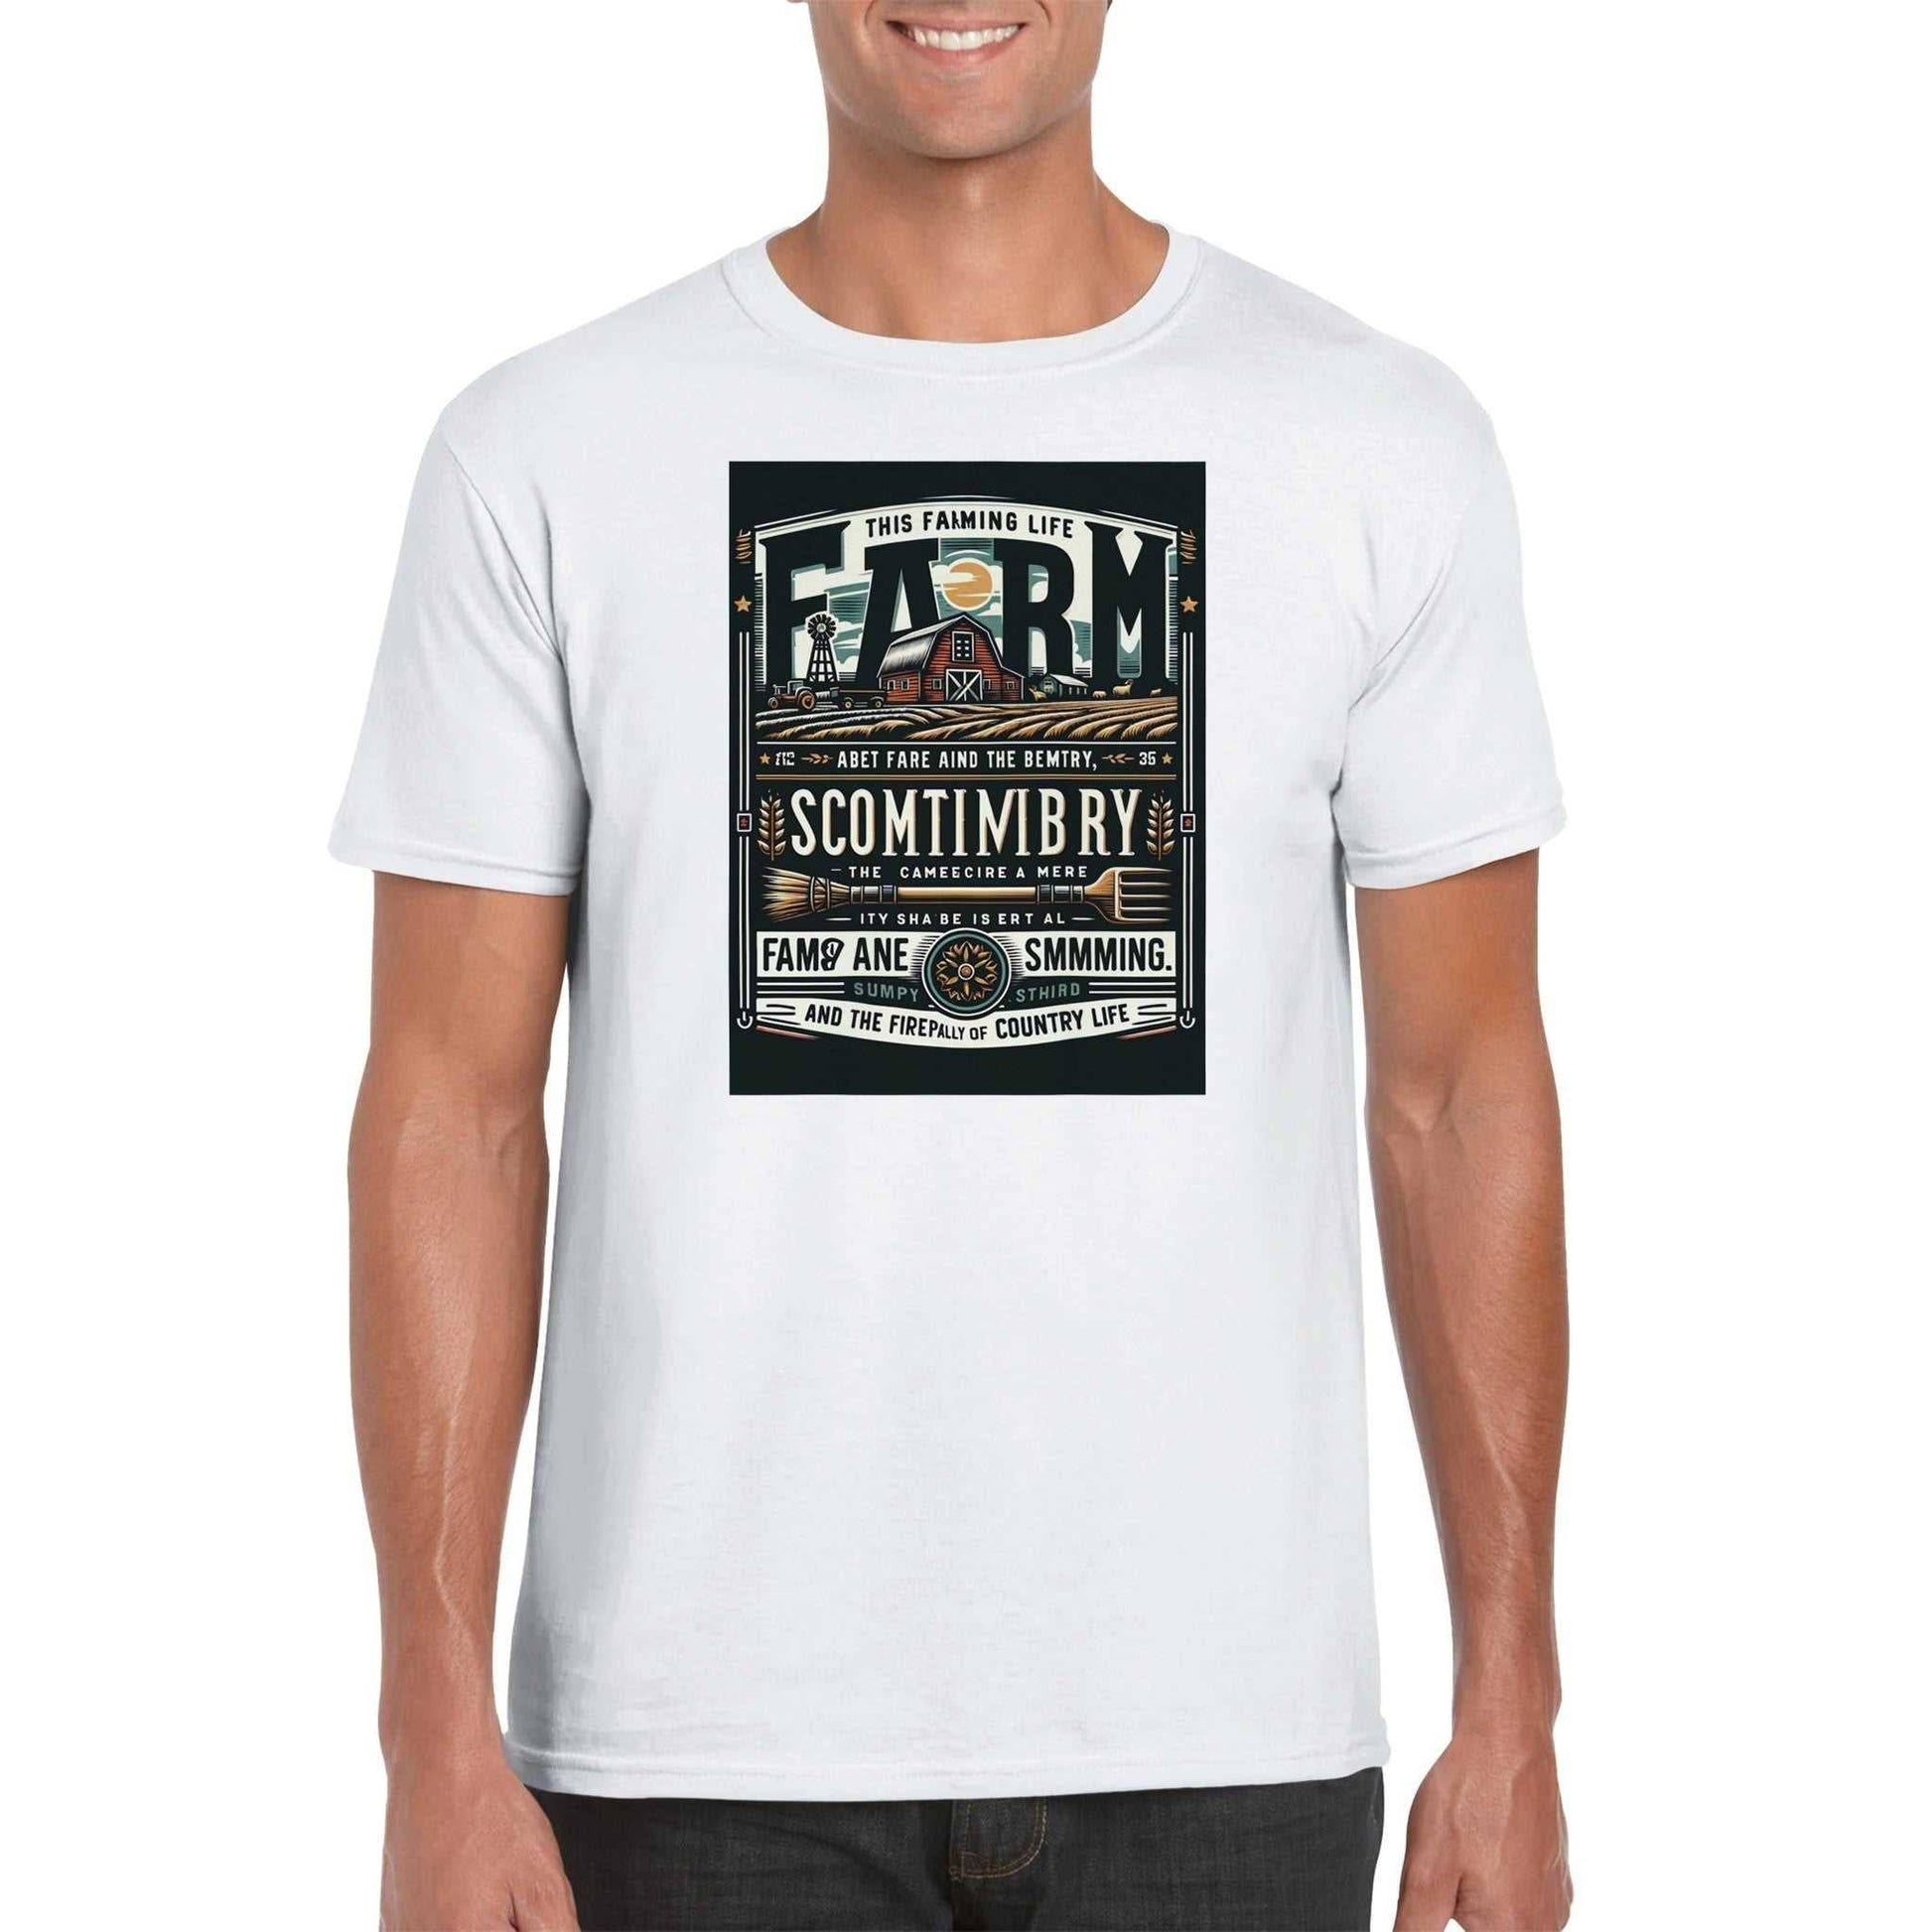 Classic  Crewneck "Countryside Charm" Farm T-Shirt - 100% soft, breathable cotton - BeinCart